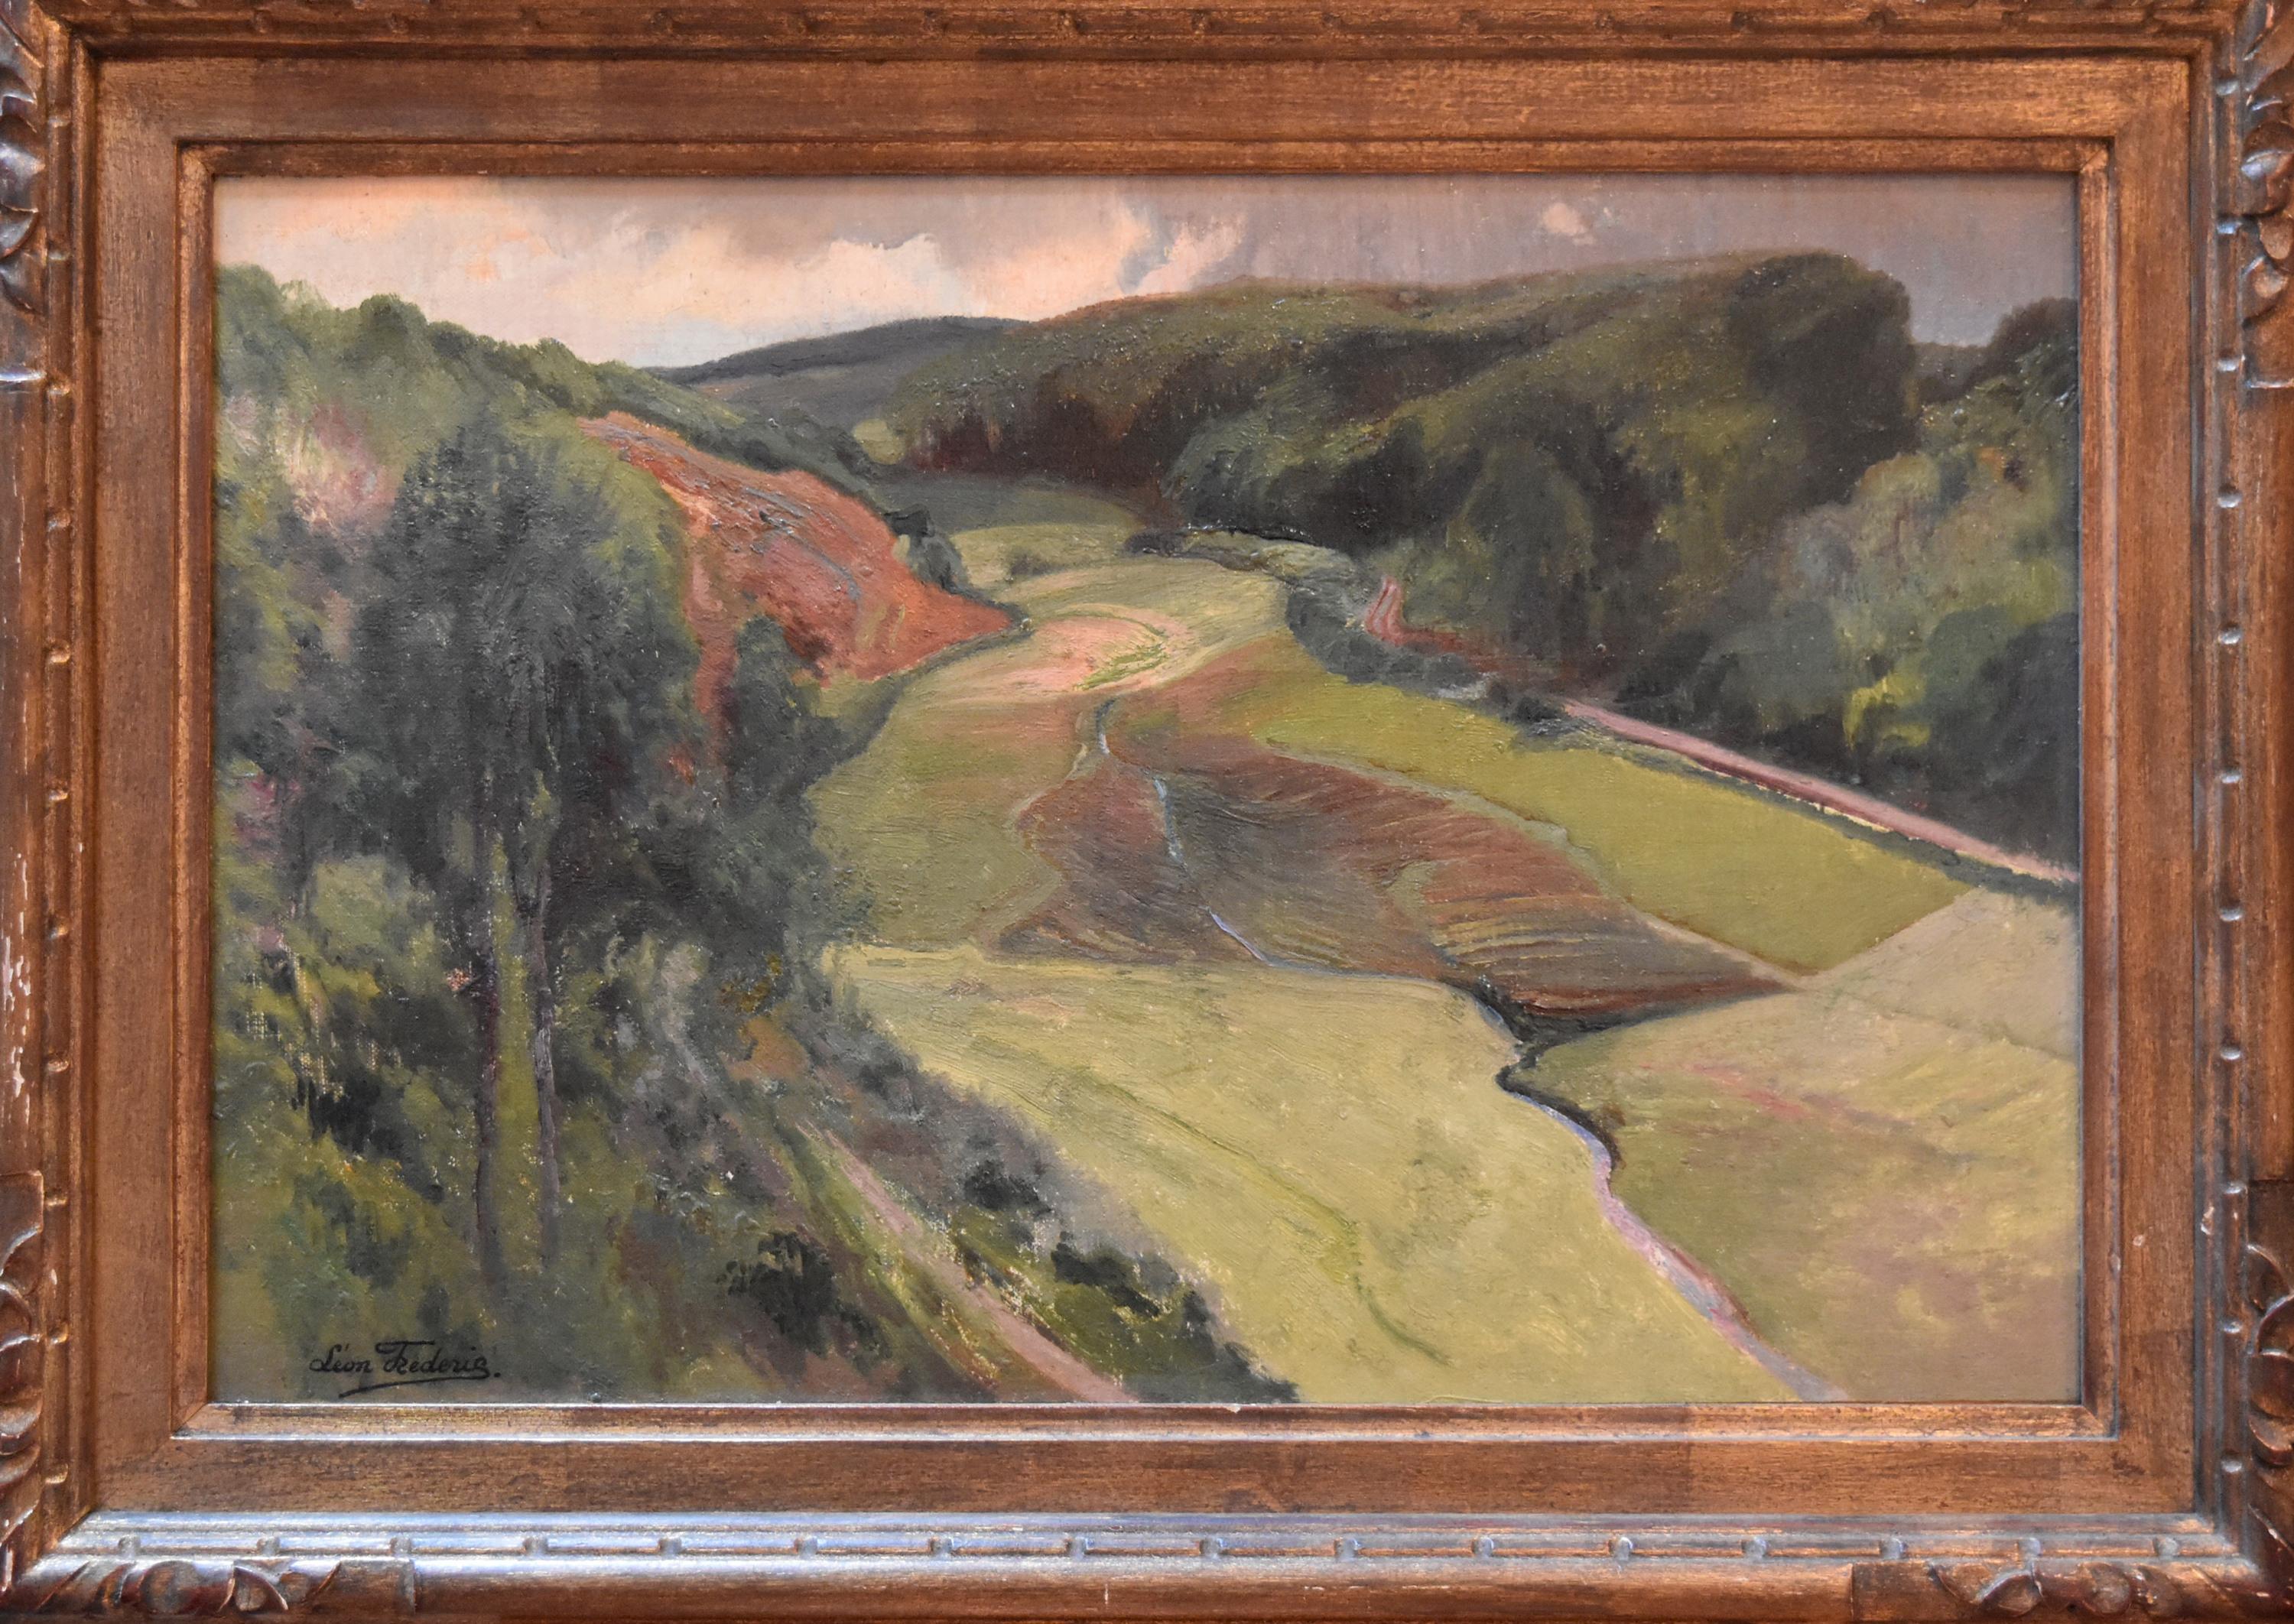 Léon Frédéric (1856-1940)
Vallée de Nafraiture
Signed on the lower left
Oil on panel
30 x 44.5 cm
Original Frame  :40 x 55 cm
 
Léon Frédéric  was a Belgian Symbolist painter. 
In 1883, he moved to Nafraiture, in the Belgian Ardennes. He painted the